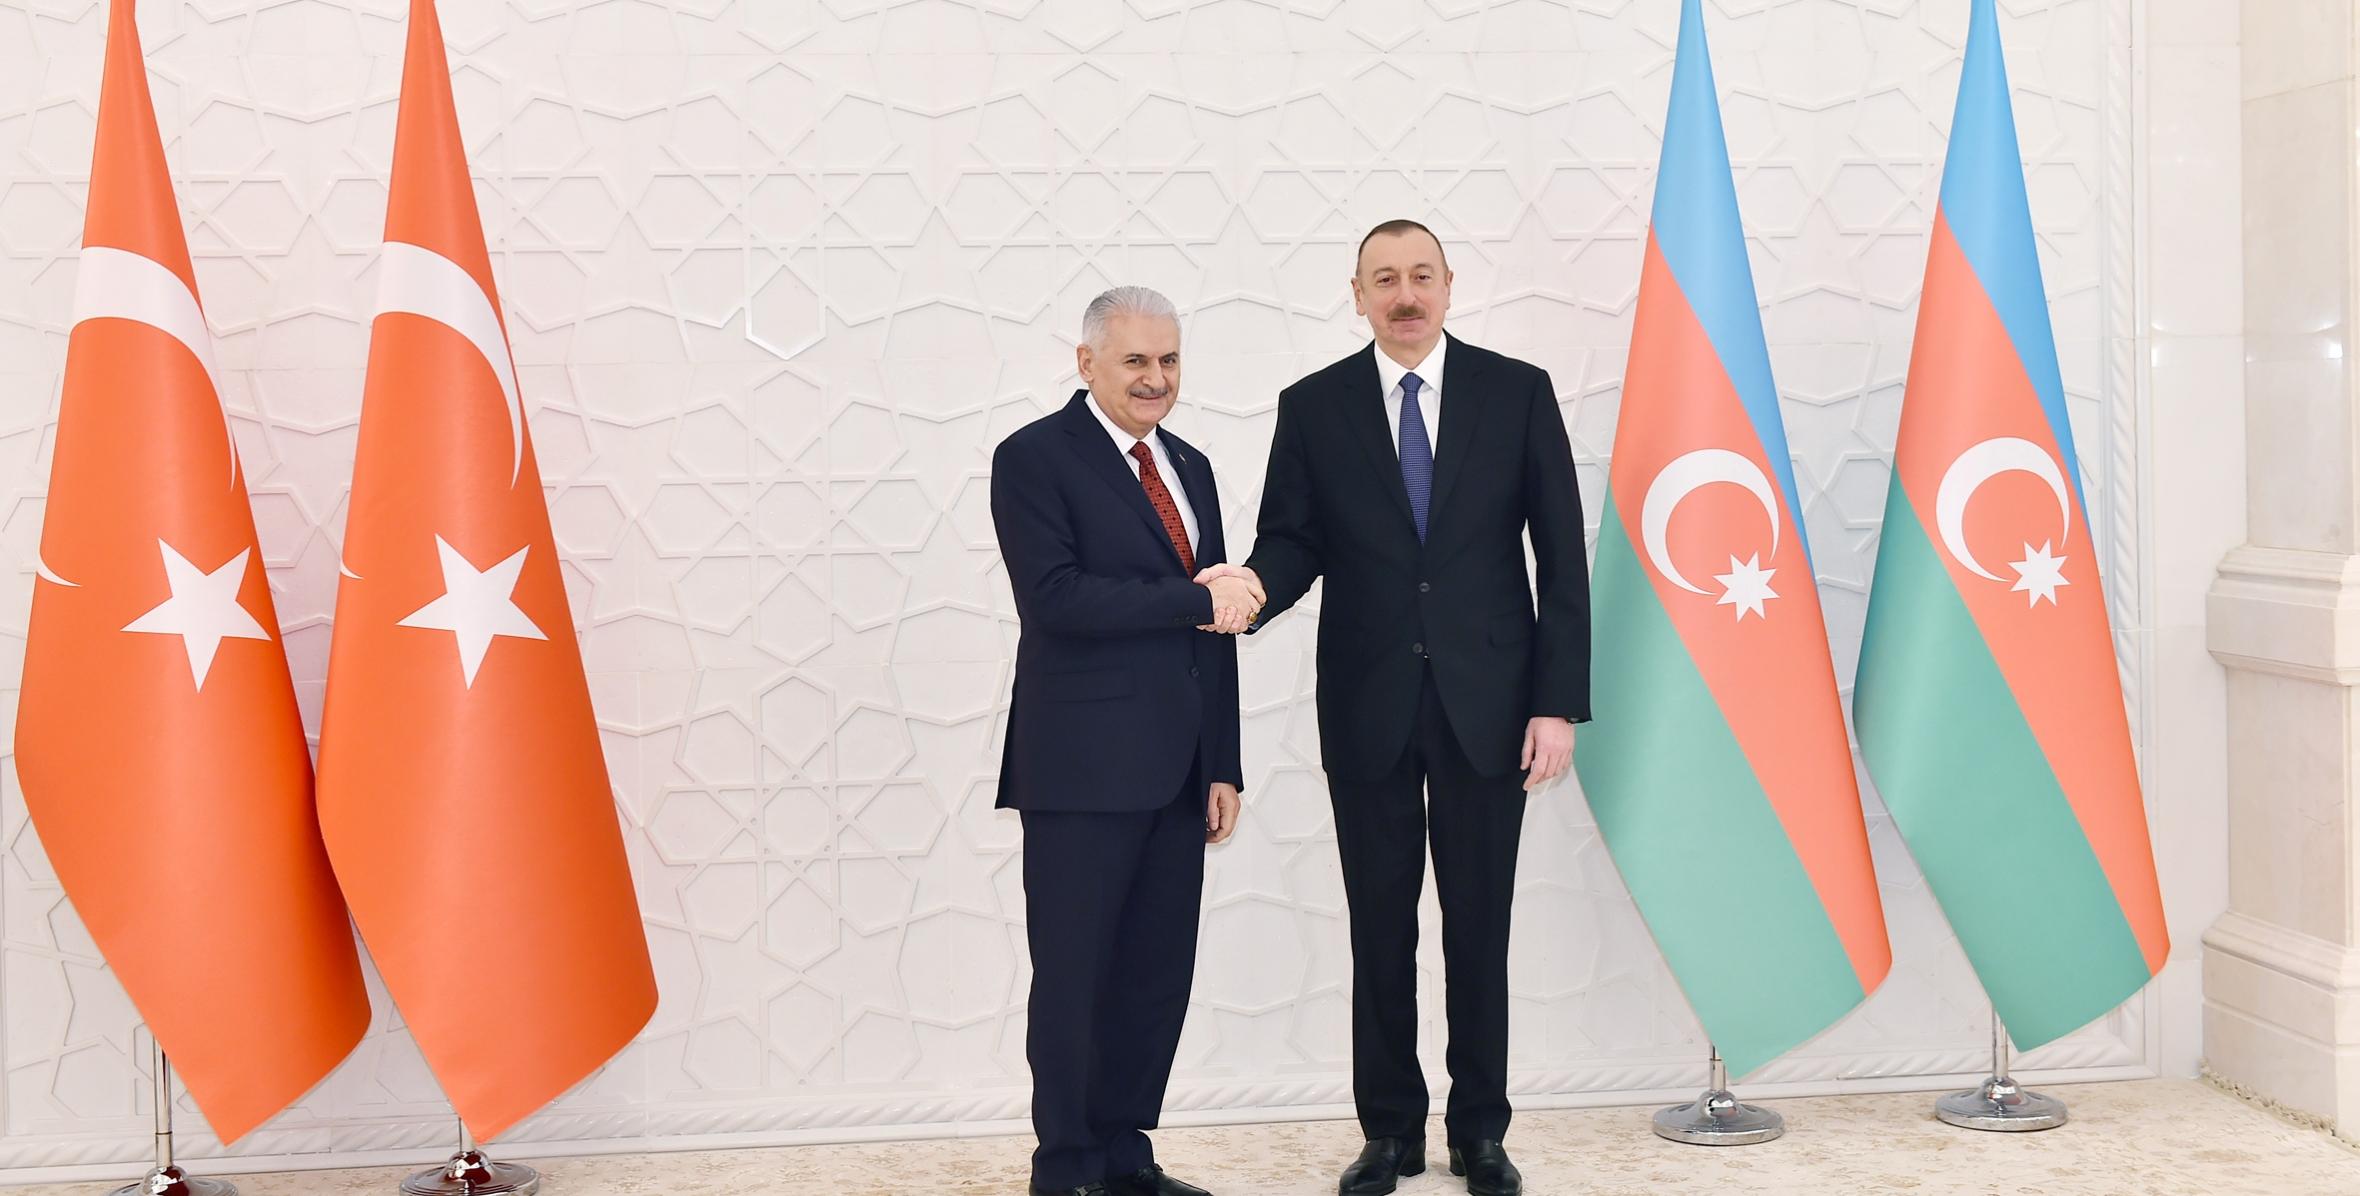 Ilham Aliyev met with Turkish Prime Minister Binali Yildirim